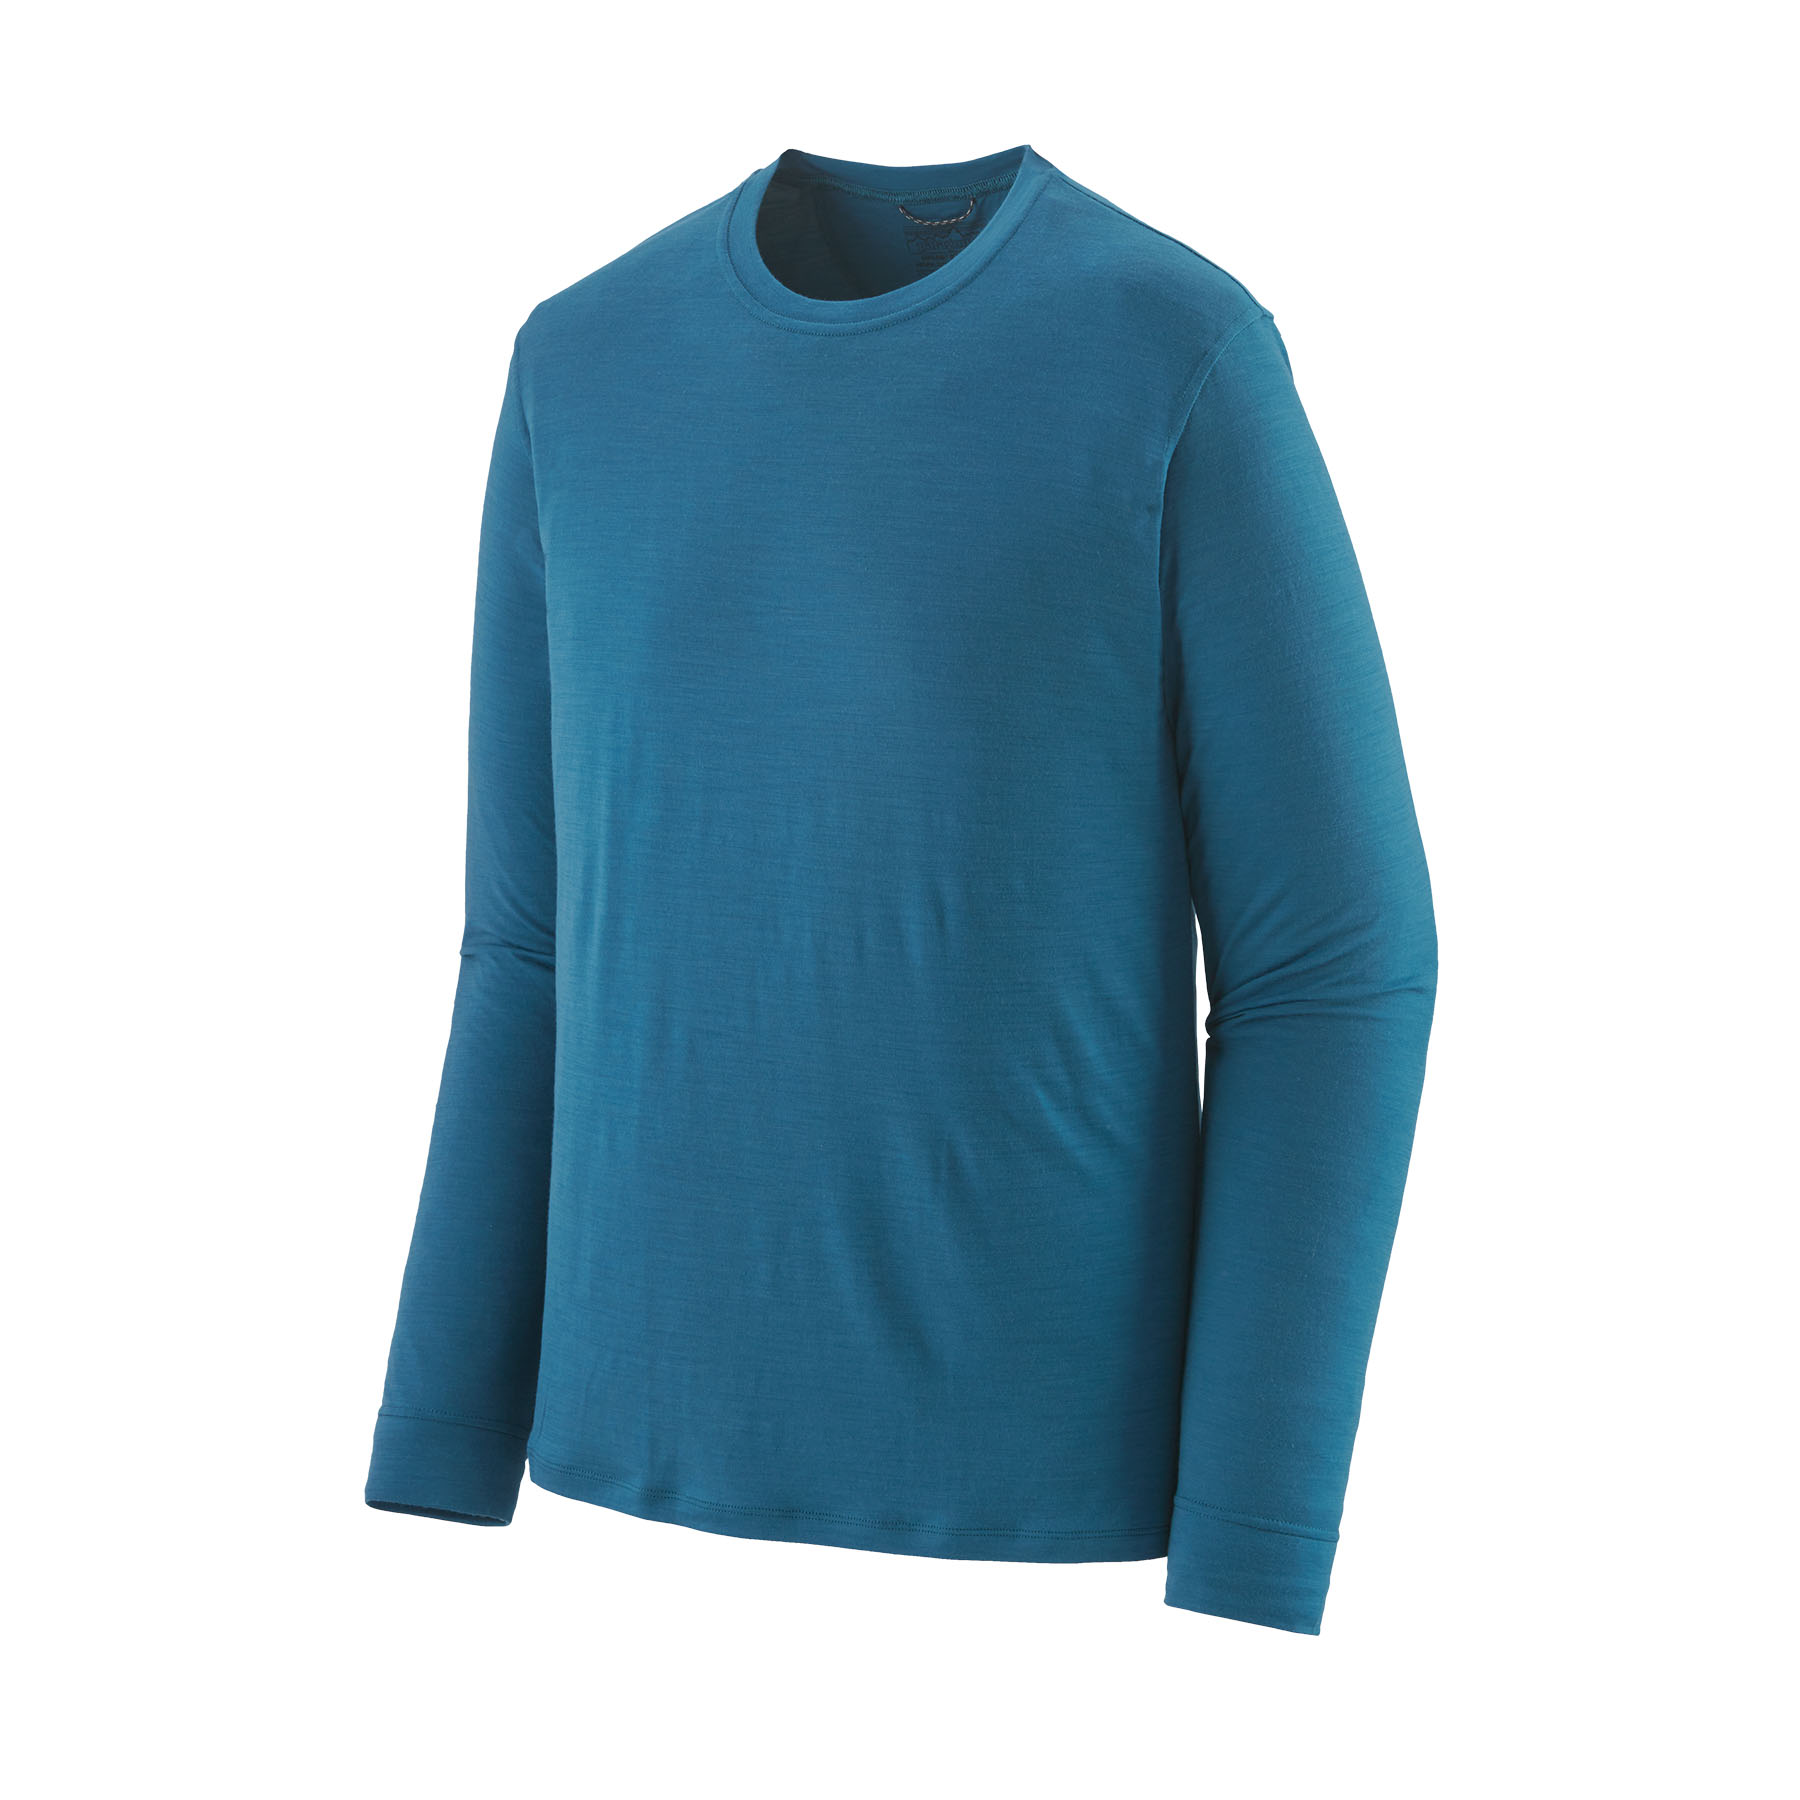 M's L/S Cap Cool Merino Shirt (wavy blue)